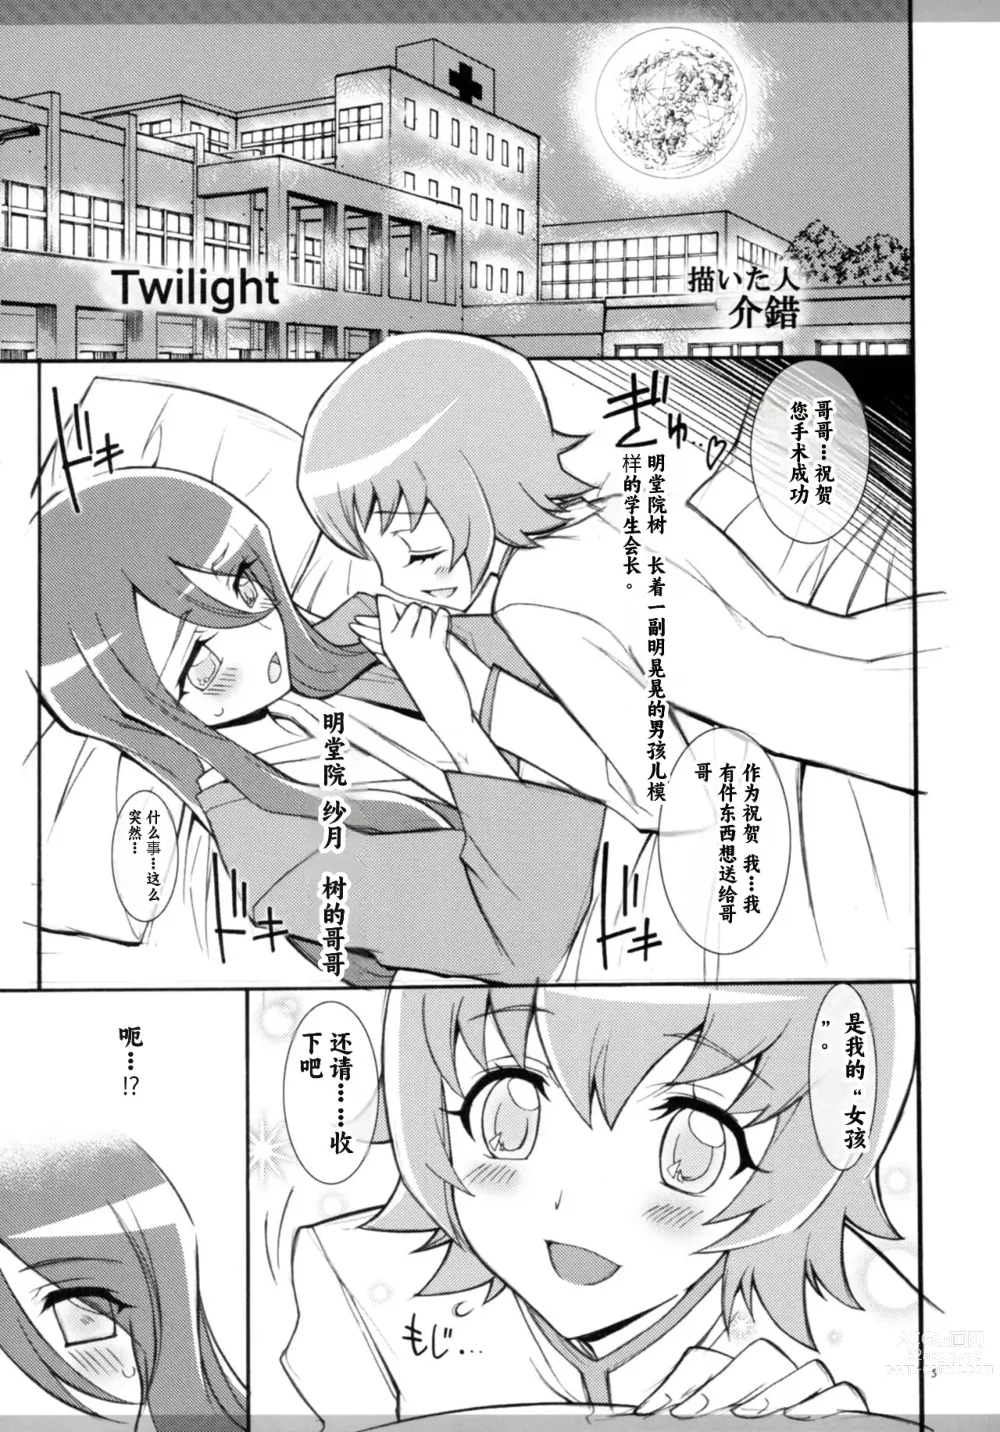 Page 4 of doujinshi Twilight ~Newmoon~